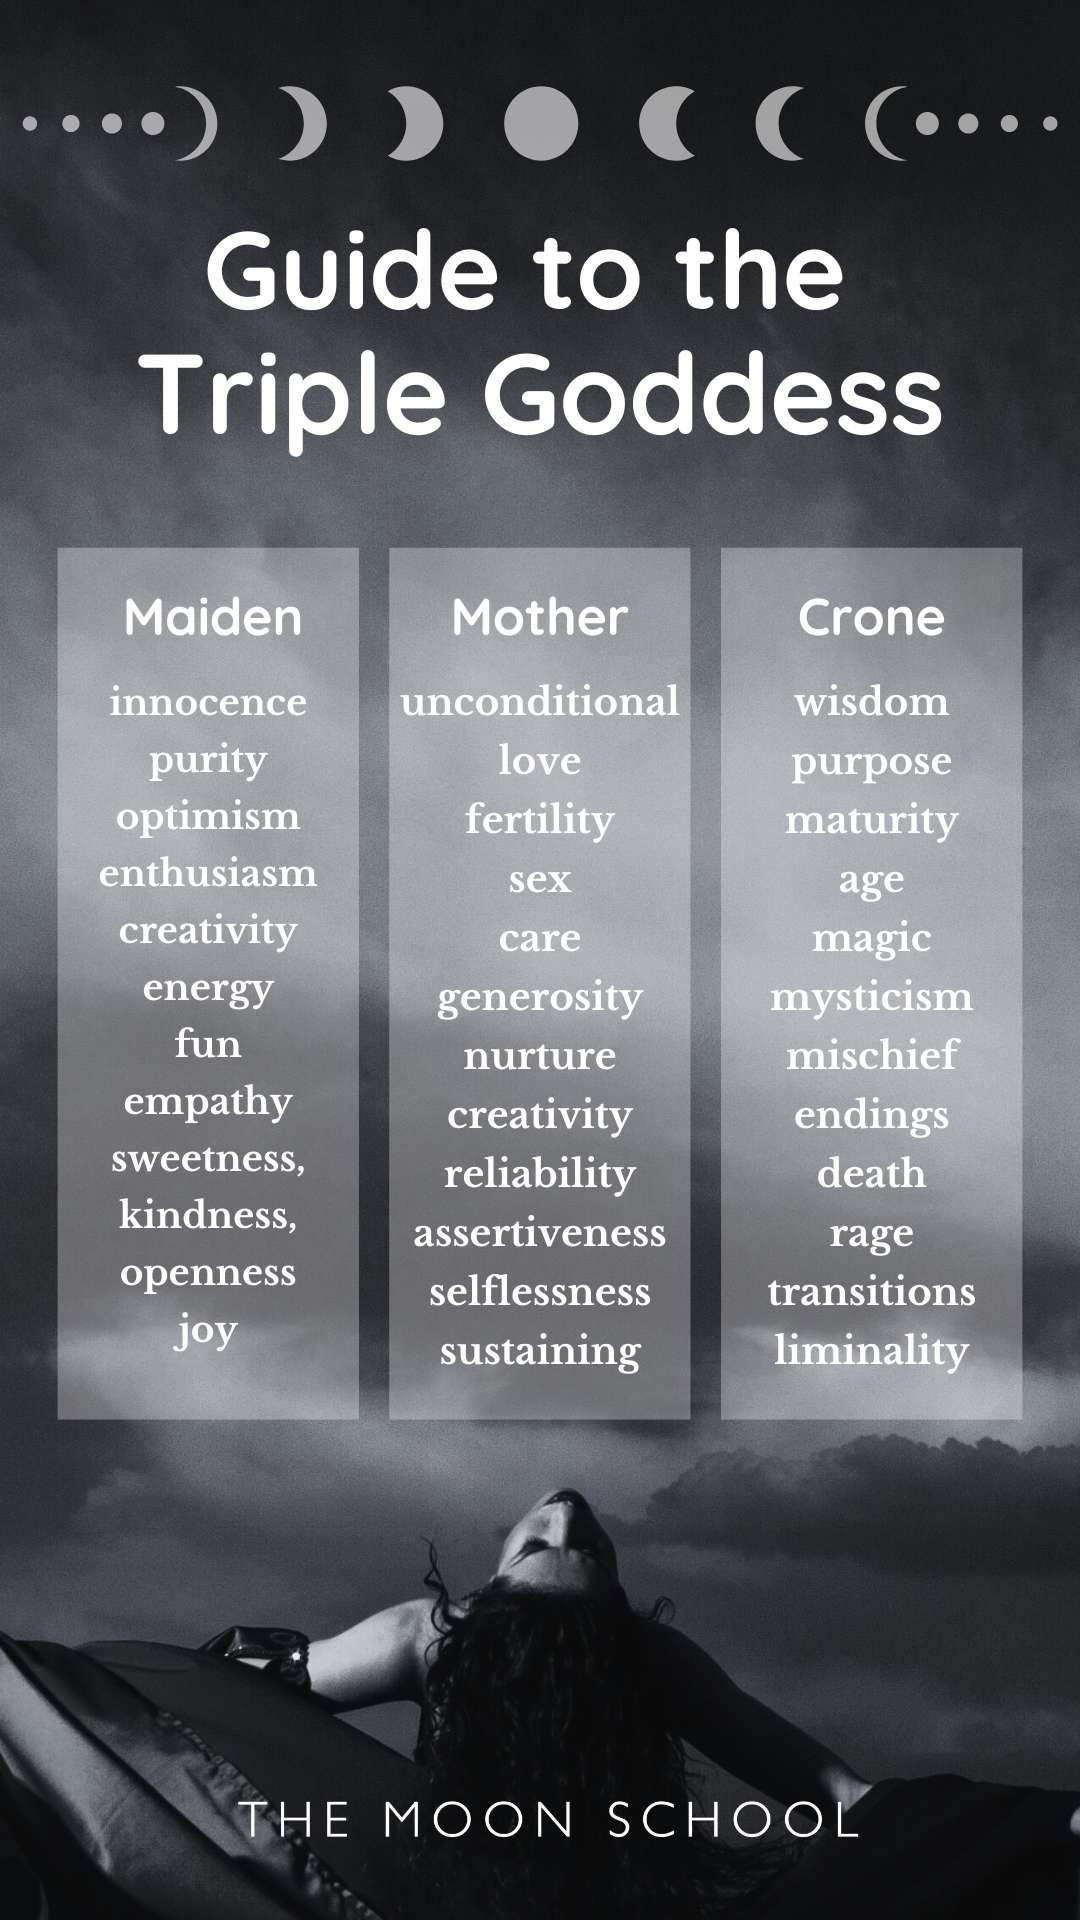 List of Maiden Mother Crone qualities